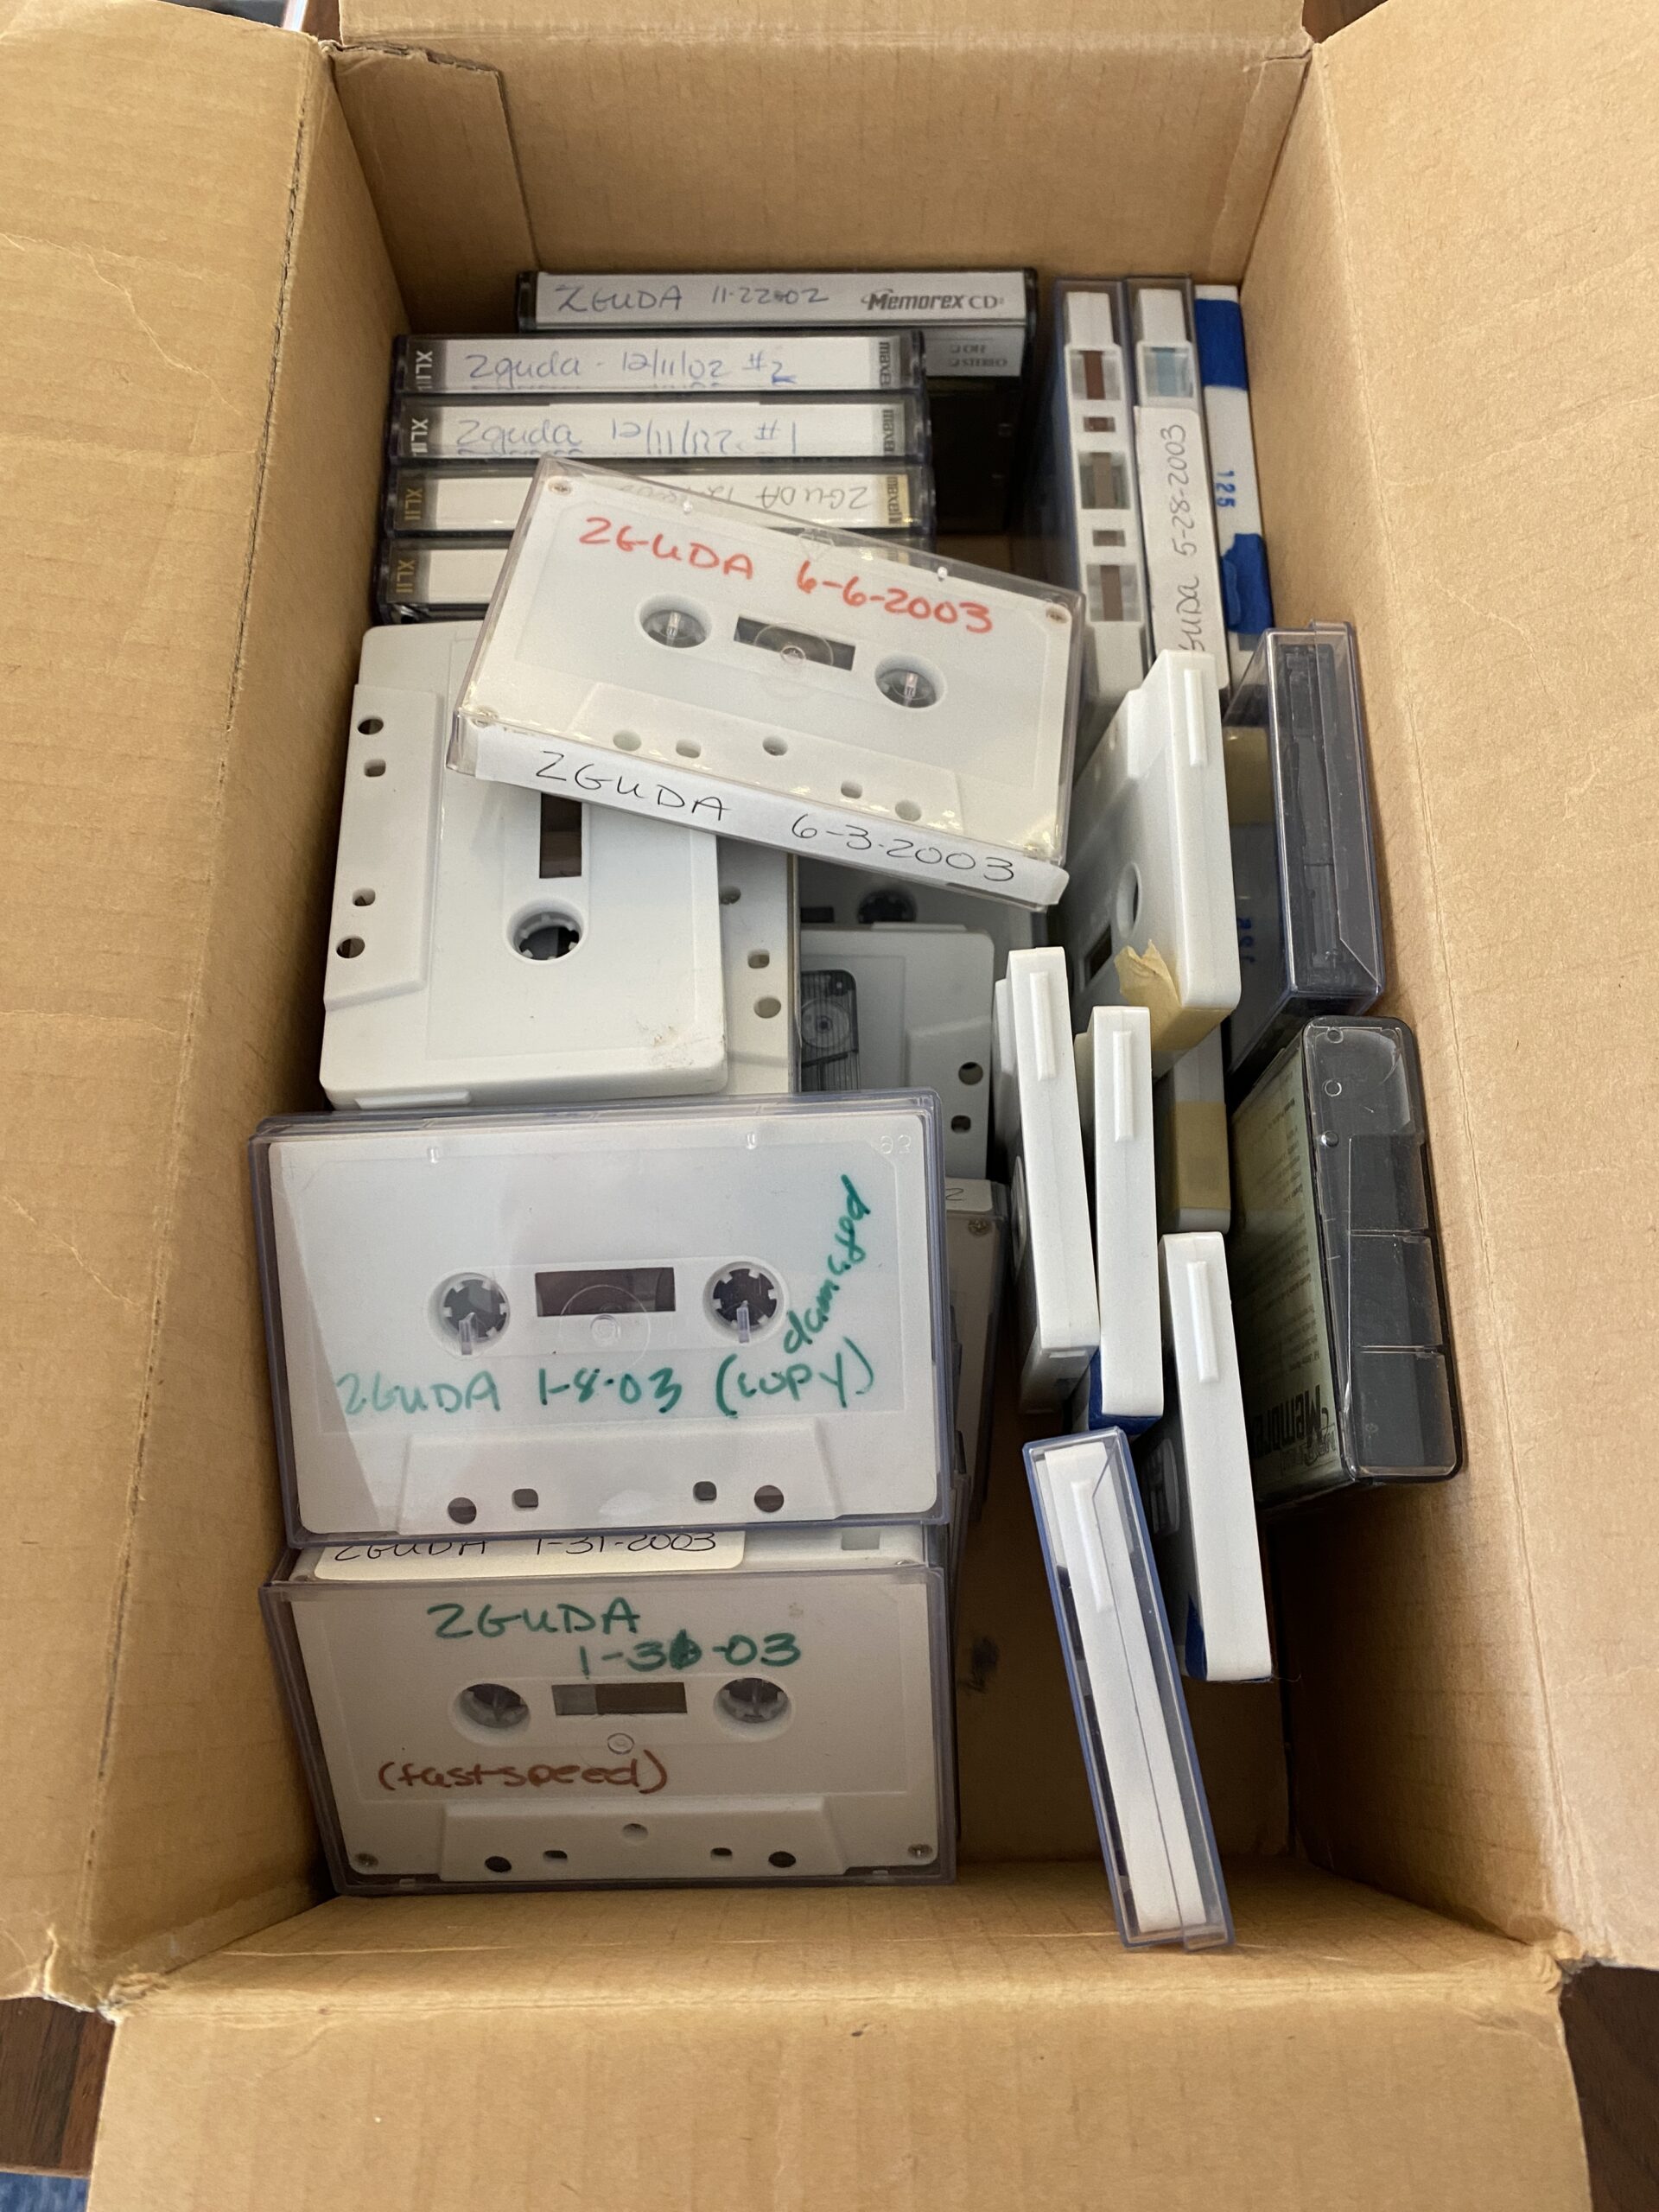 Shoebox of cassette tapes